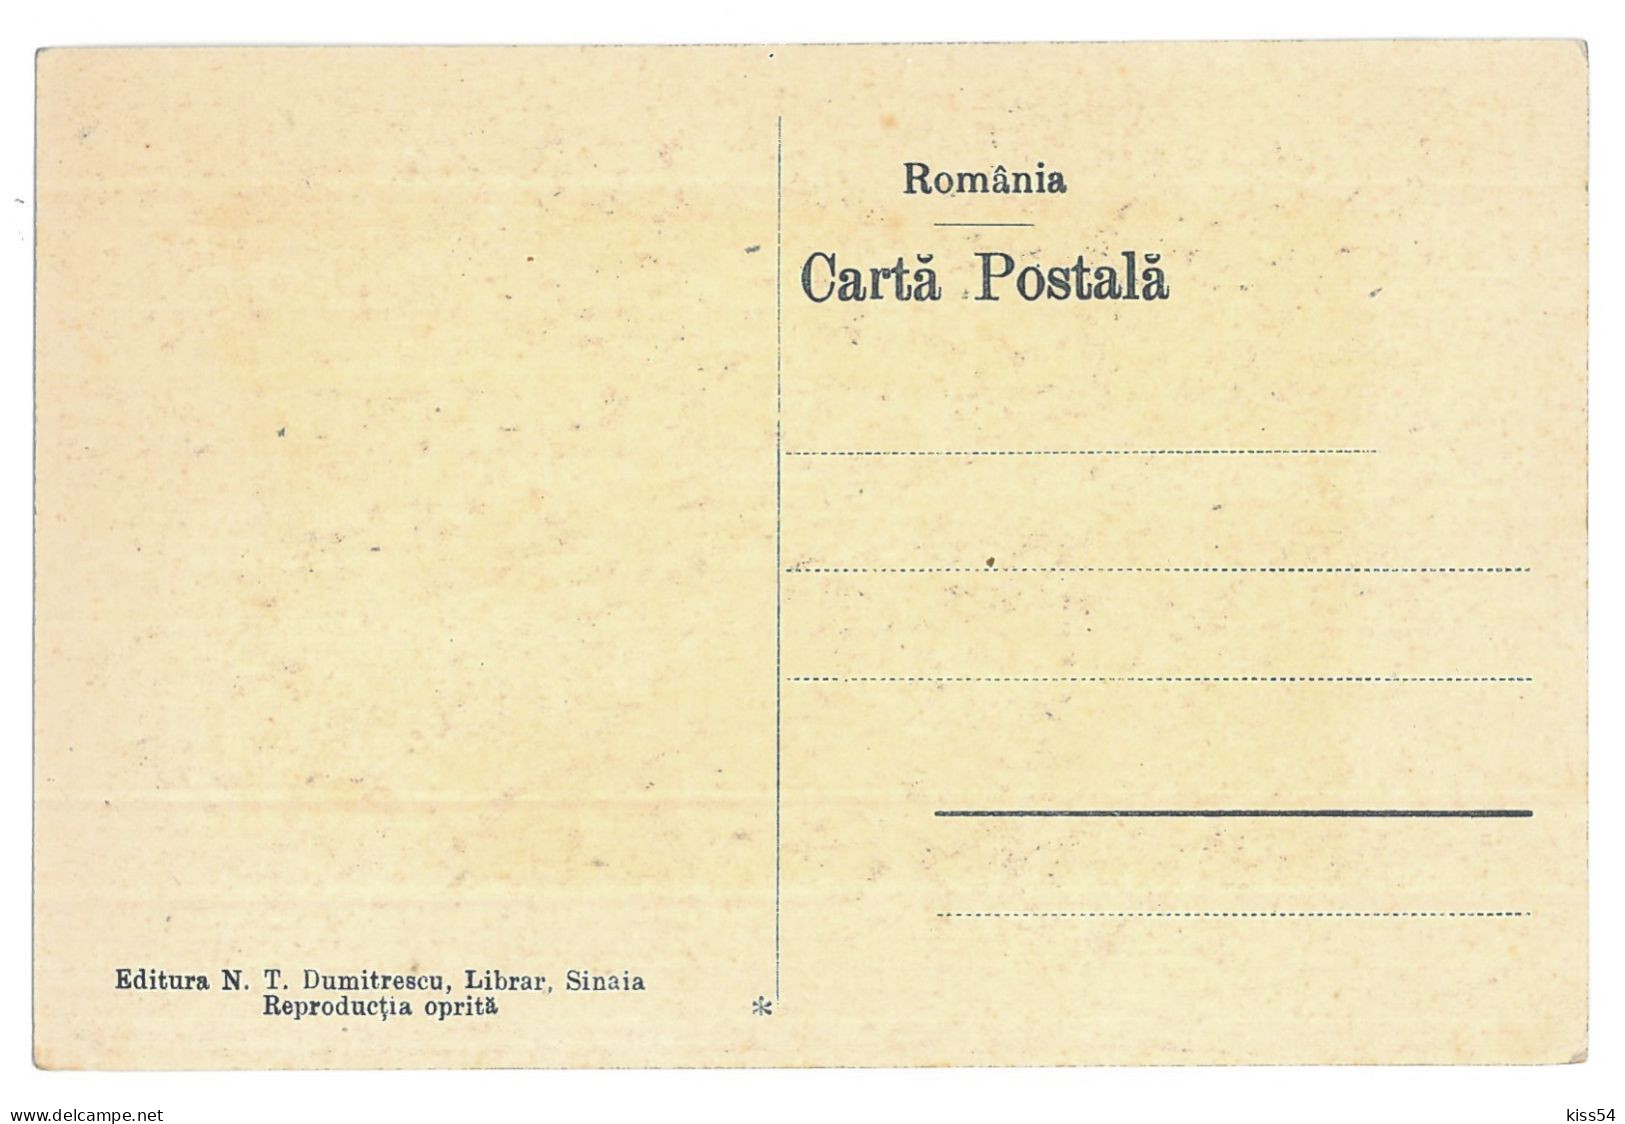 RO 91 - 13503 SINAIA, Prahova, Peles Castle, Romania - Old Postcard - Unused - Roumanie